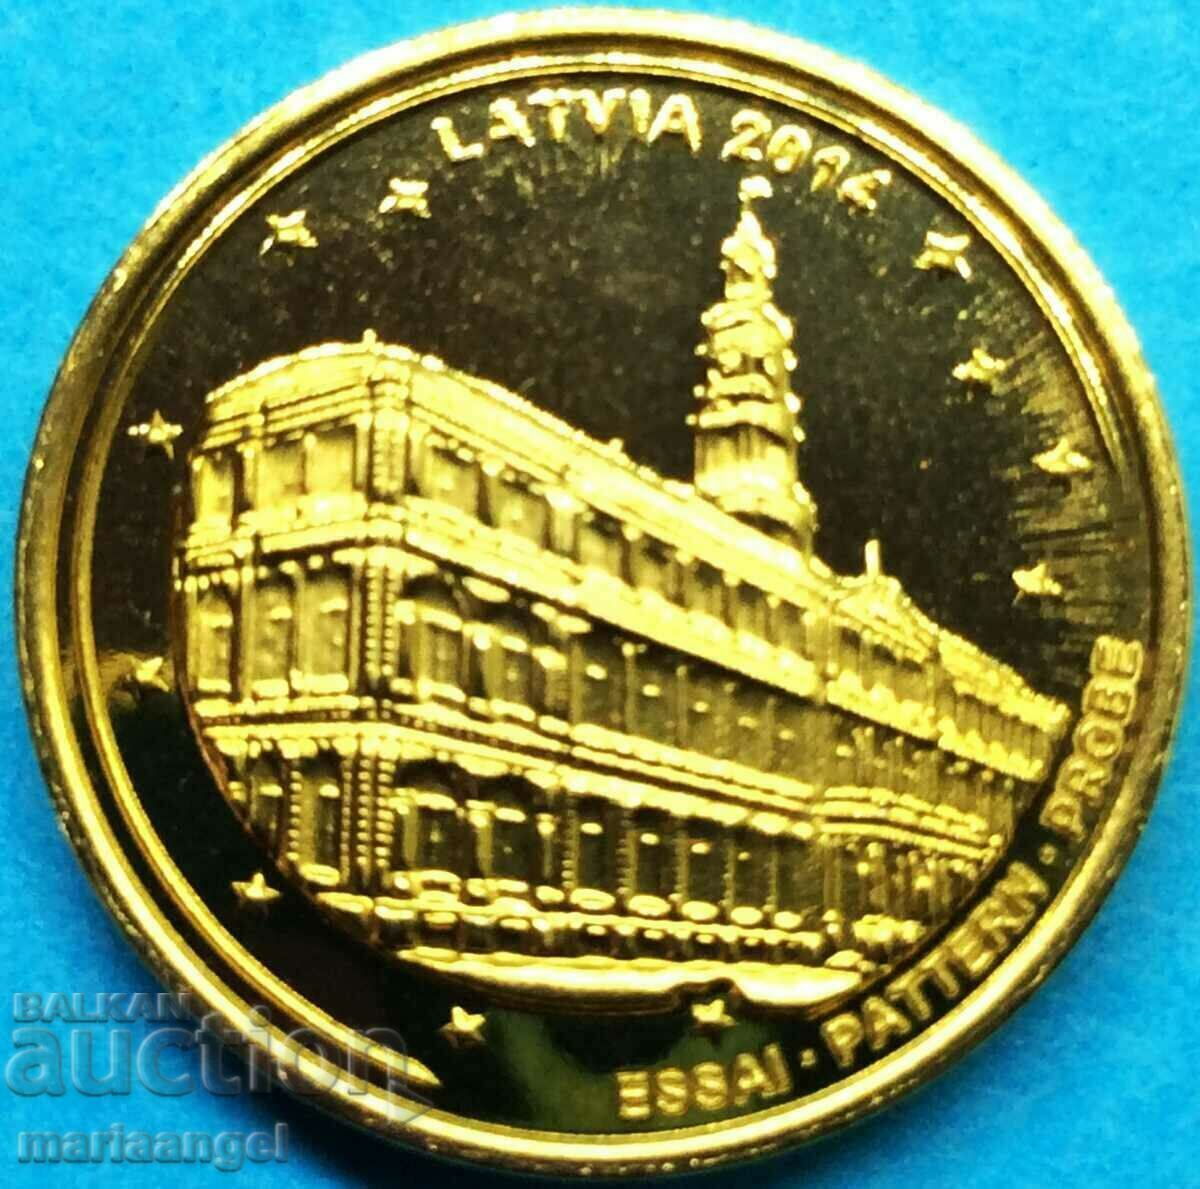 Sample Essei 20 euro cents 2014 Latvia UNC PROOF 5000 pcs